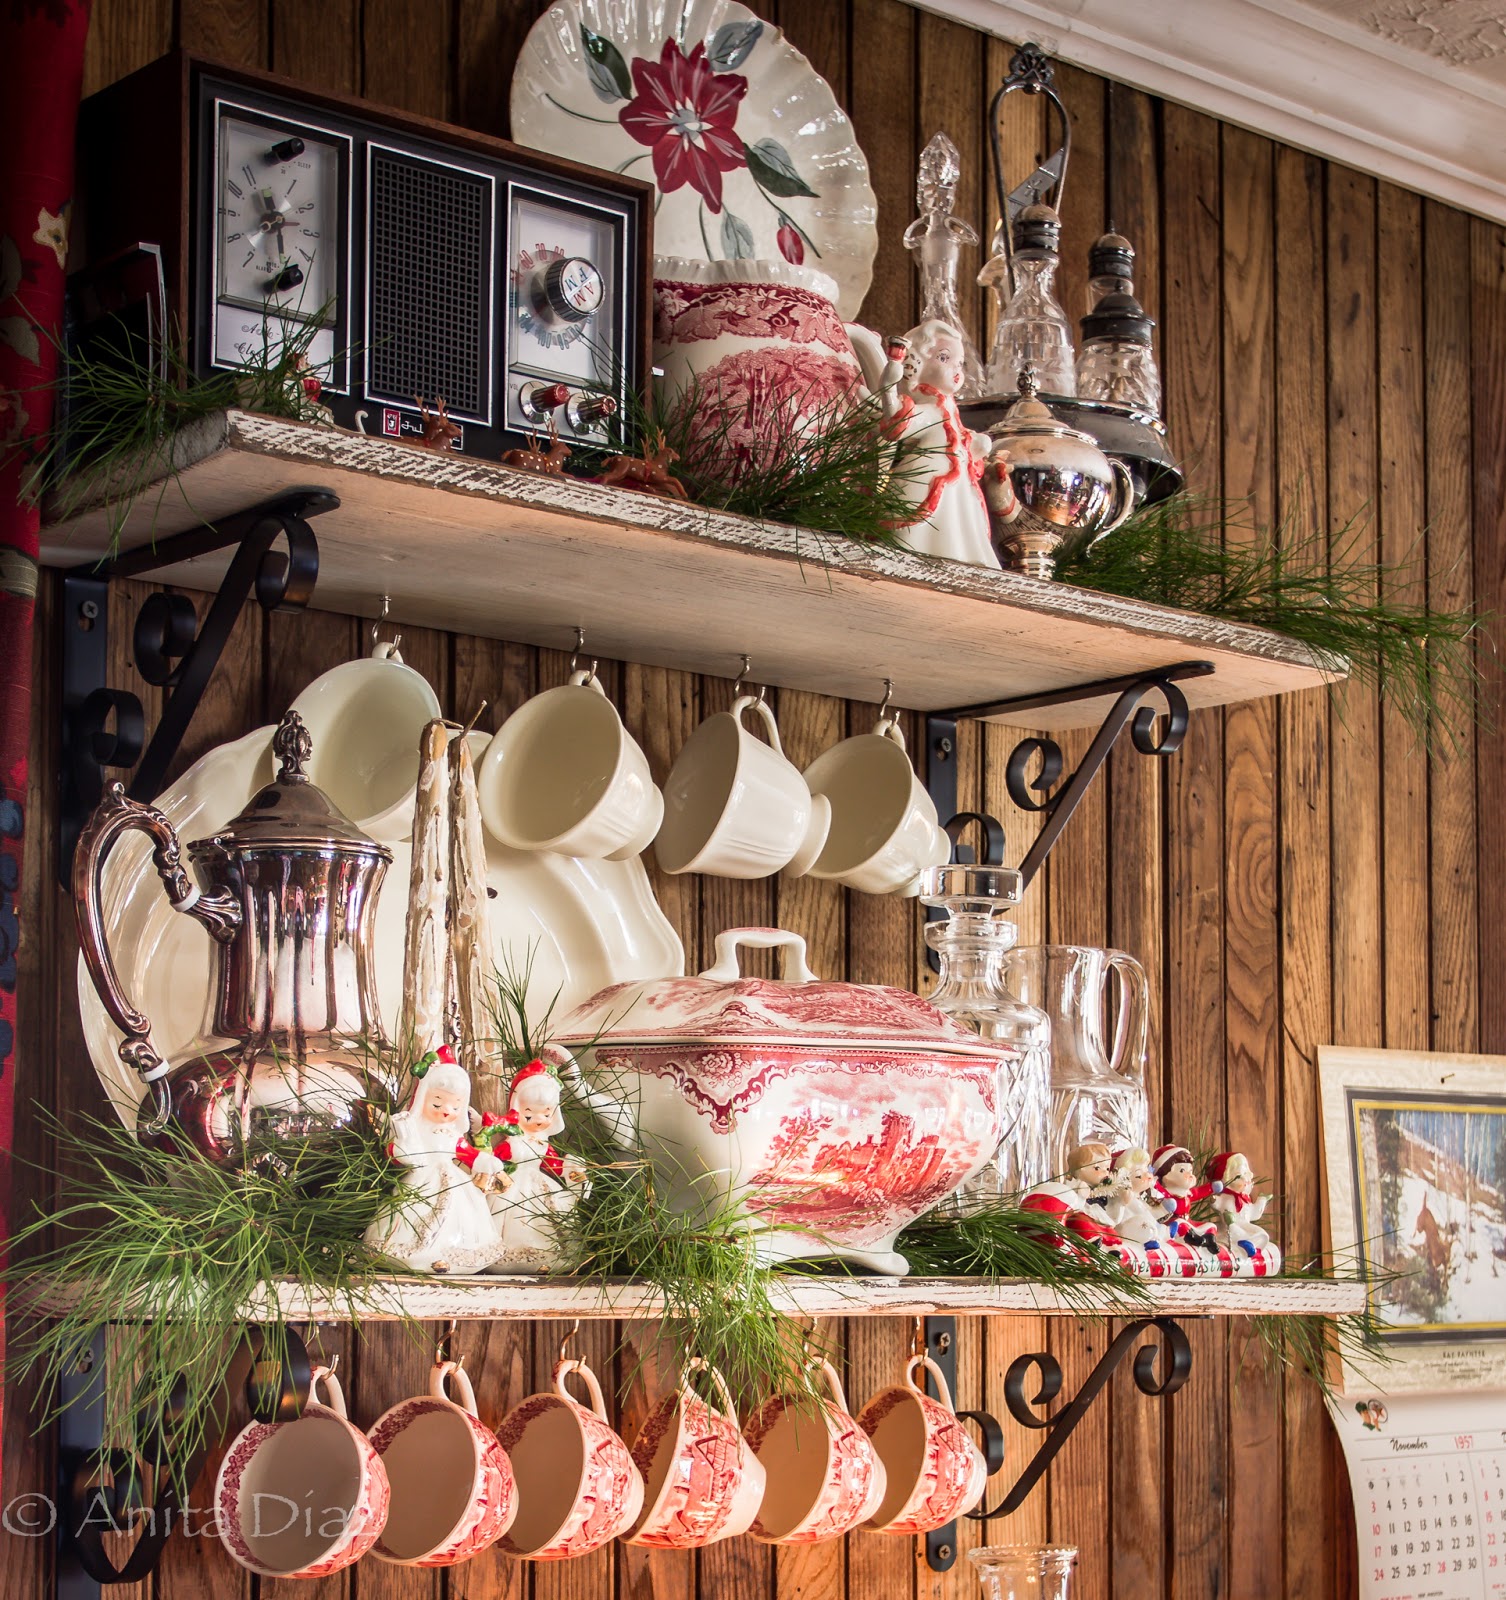 Penny's Vintage Home: Farmhouse Christmas Kitchen featuring Mason